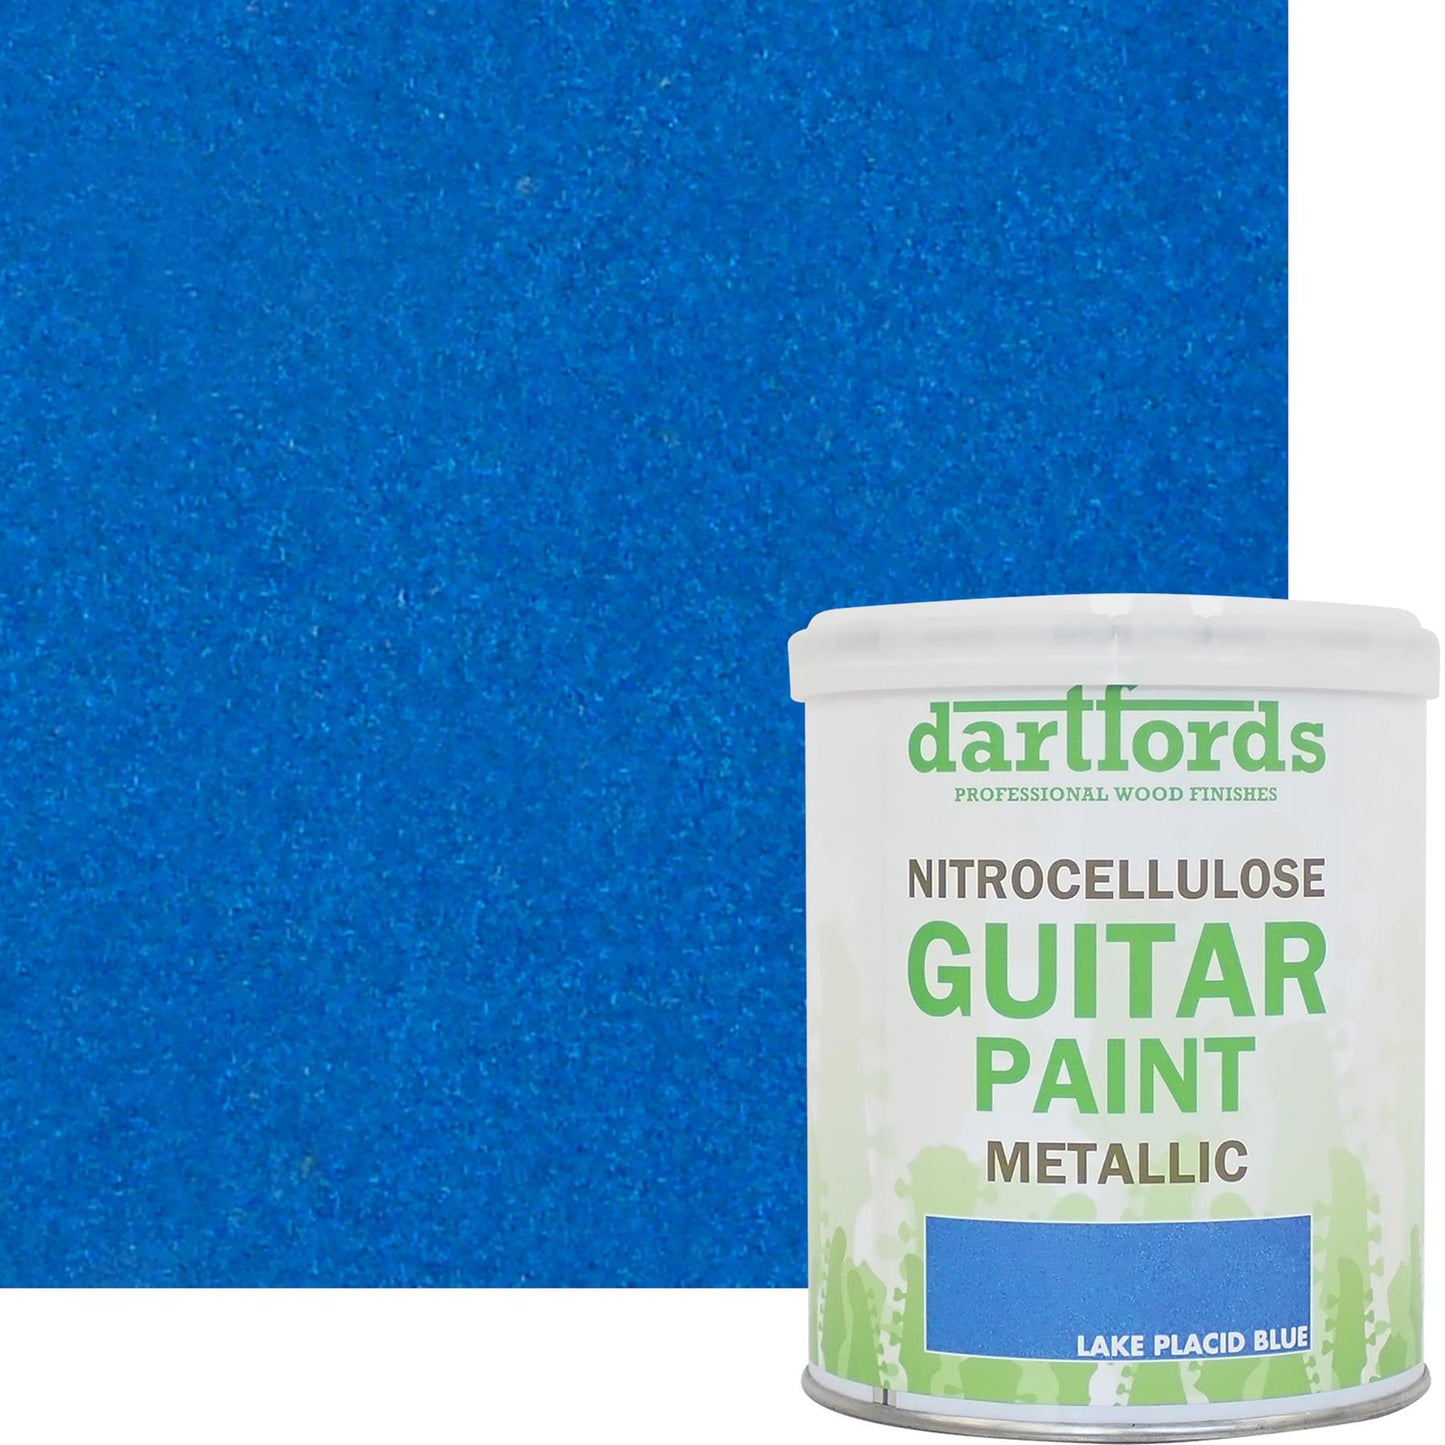 dartfords Lake Placid Blue Metallic Nitrocellulose Guitar Paint - 1 litre Tin